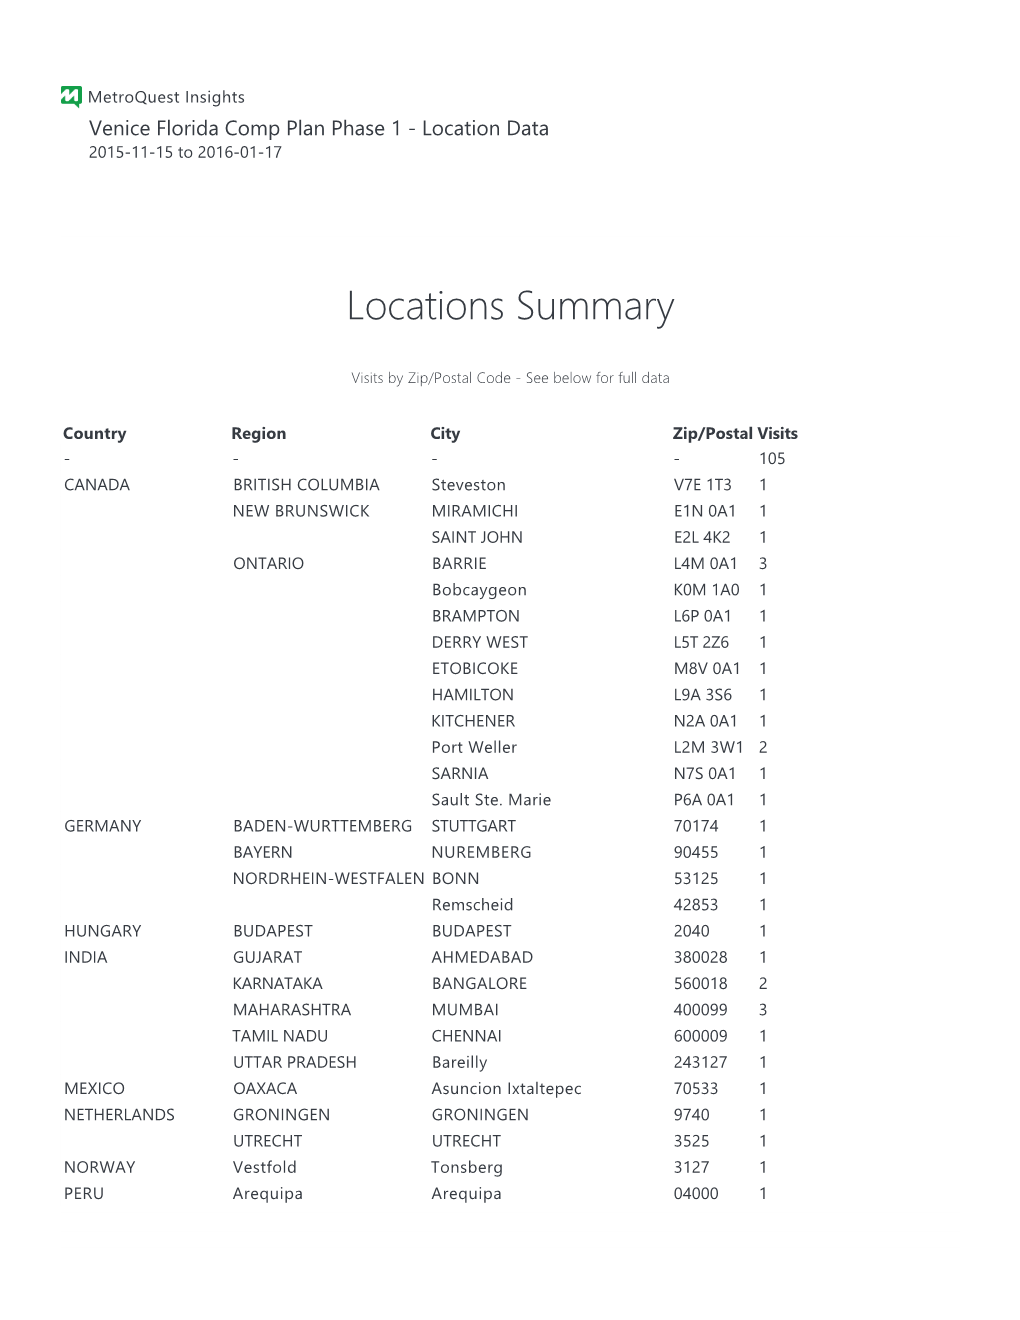 Locations Summary